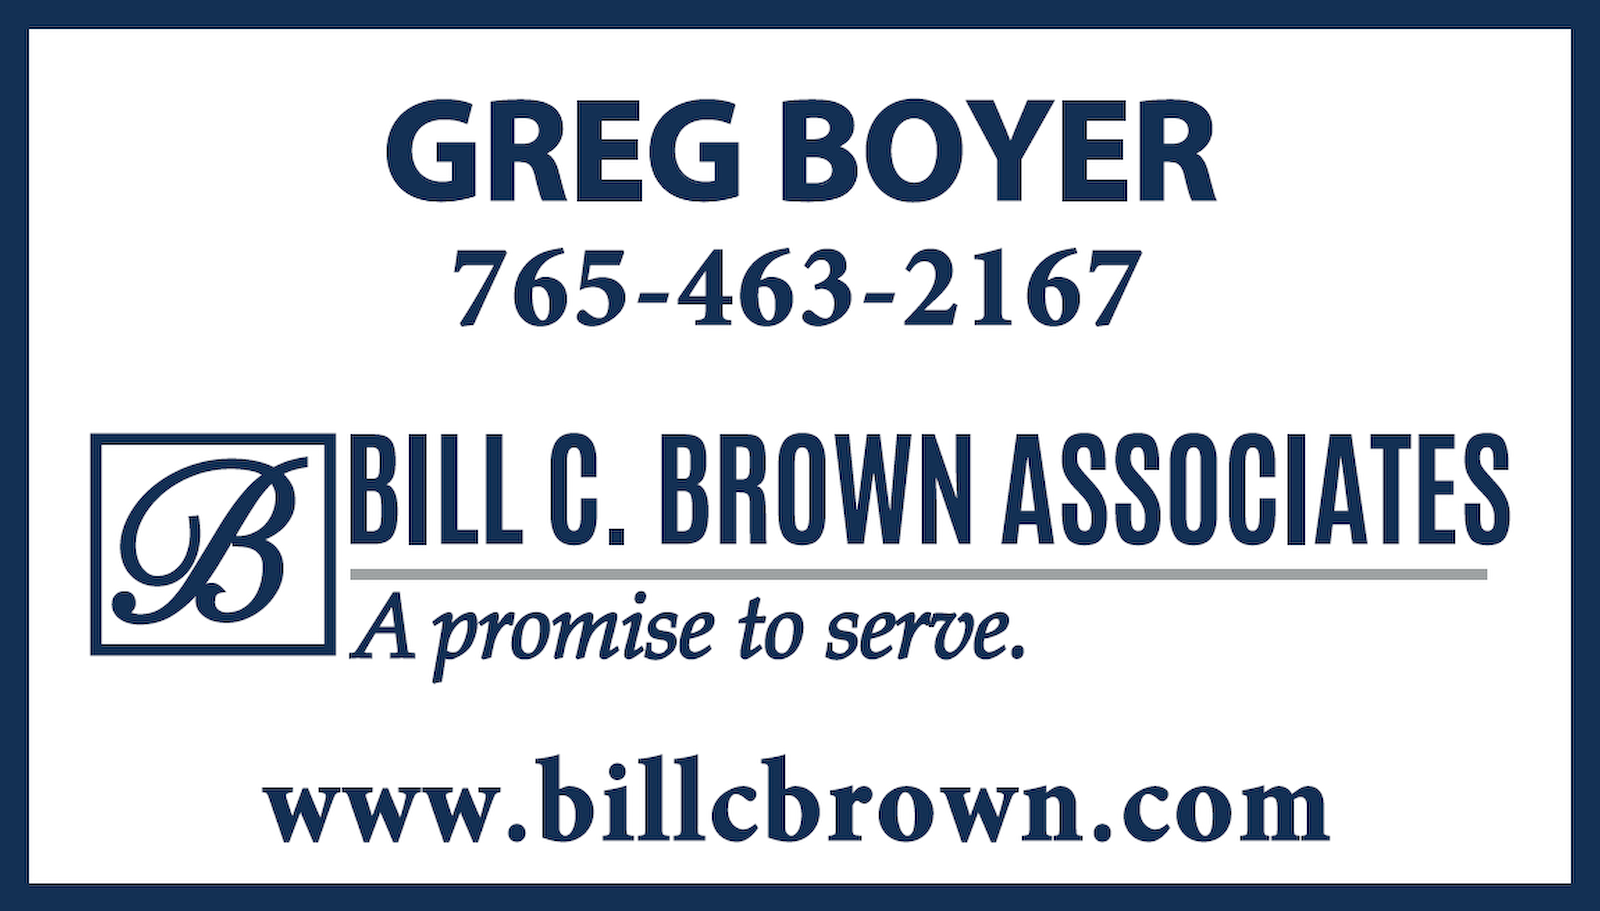 Bill C. Brown Associates